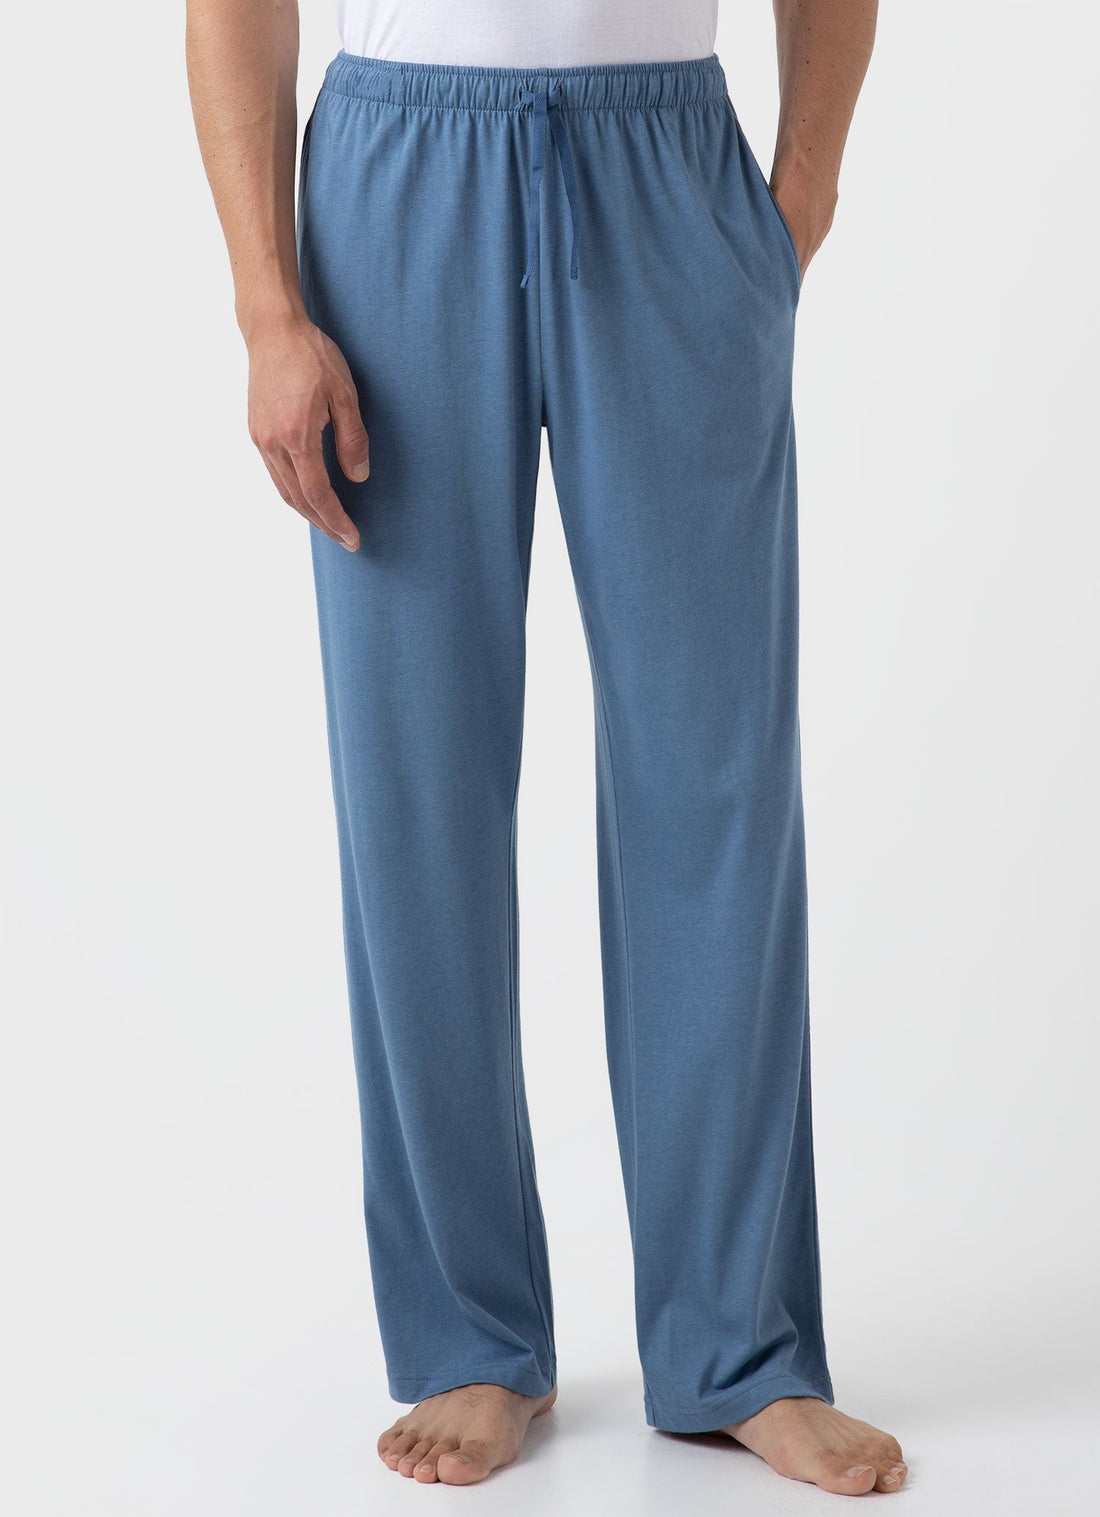 Buy iEFiEL Men's Pajamas Mesh See Through Home Lounge Pants